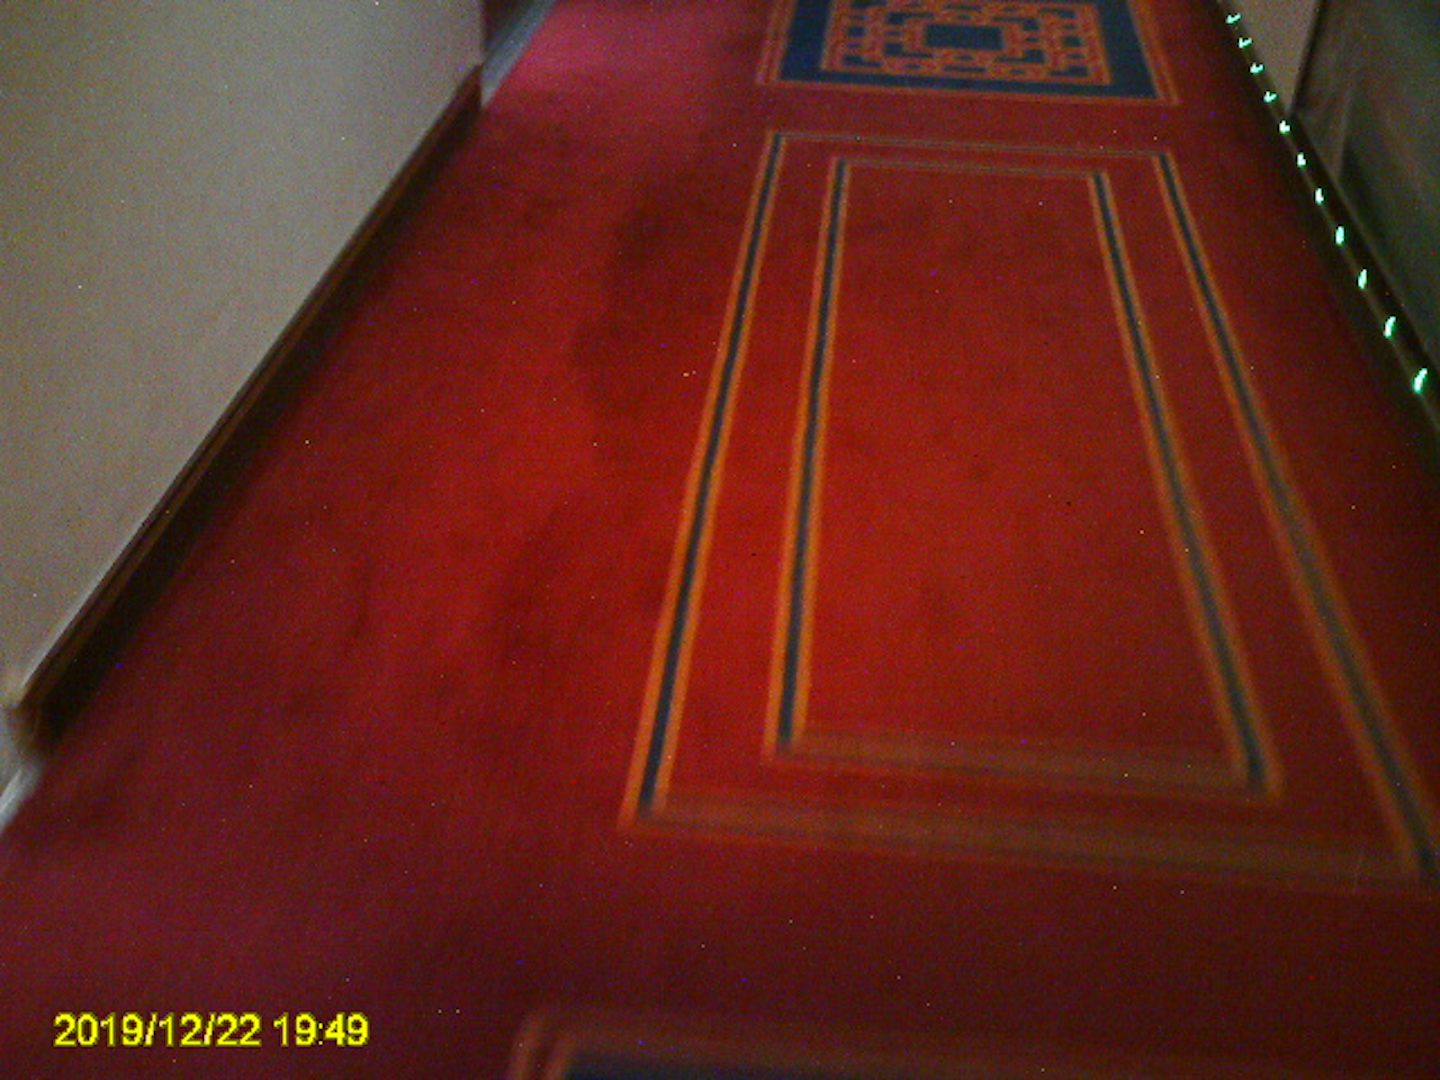 Dirty hallway carpet.